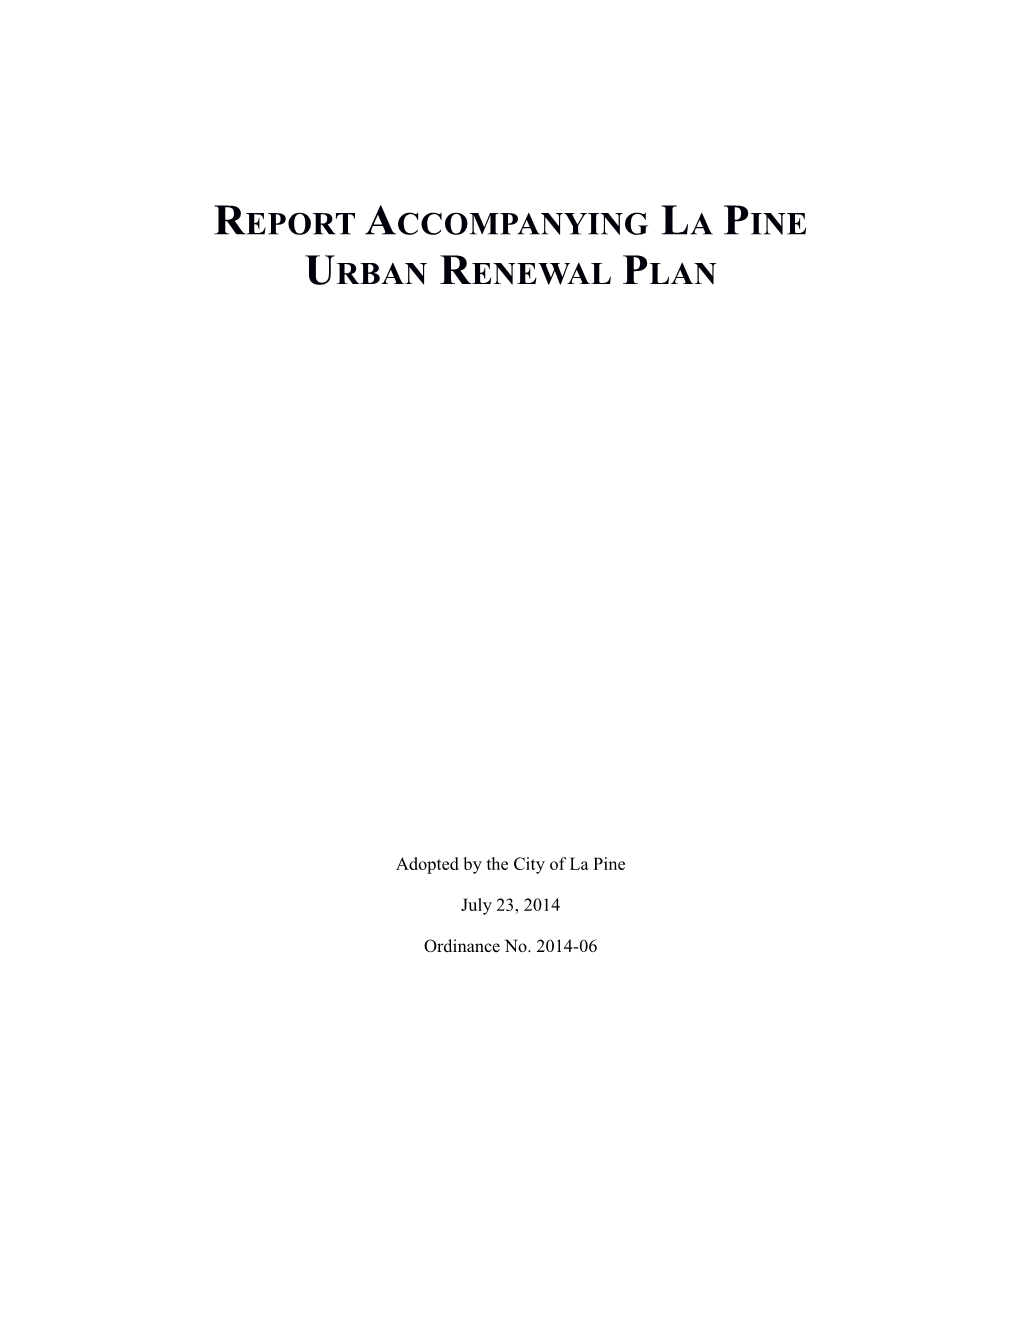 La Pine UR Report